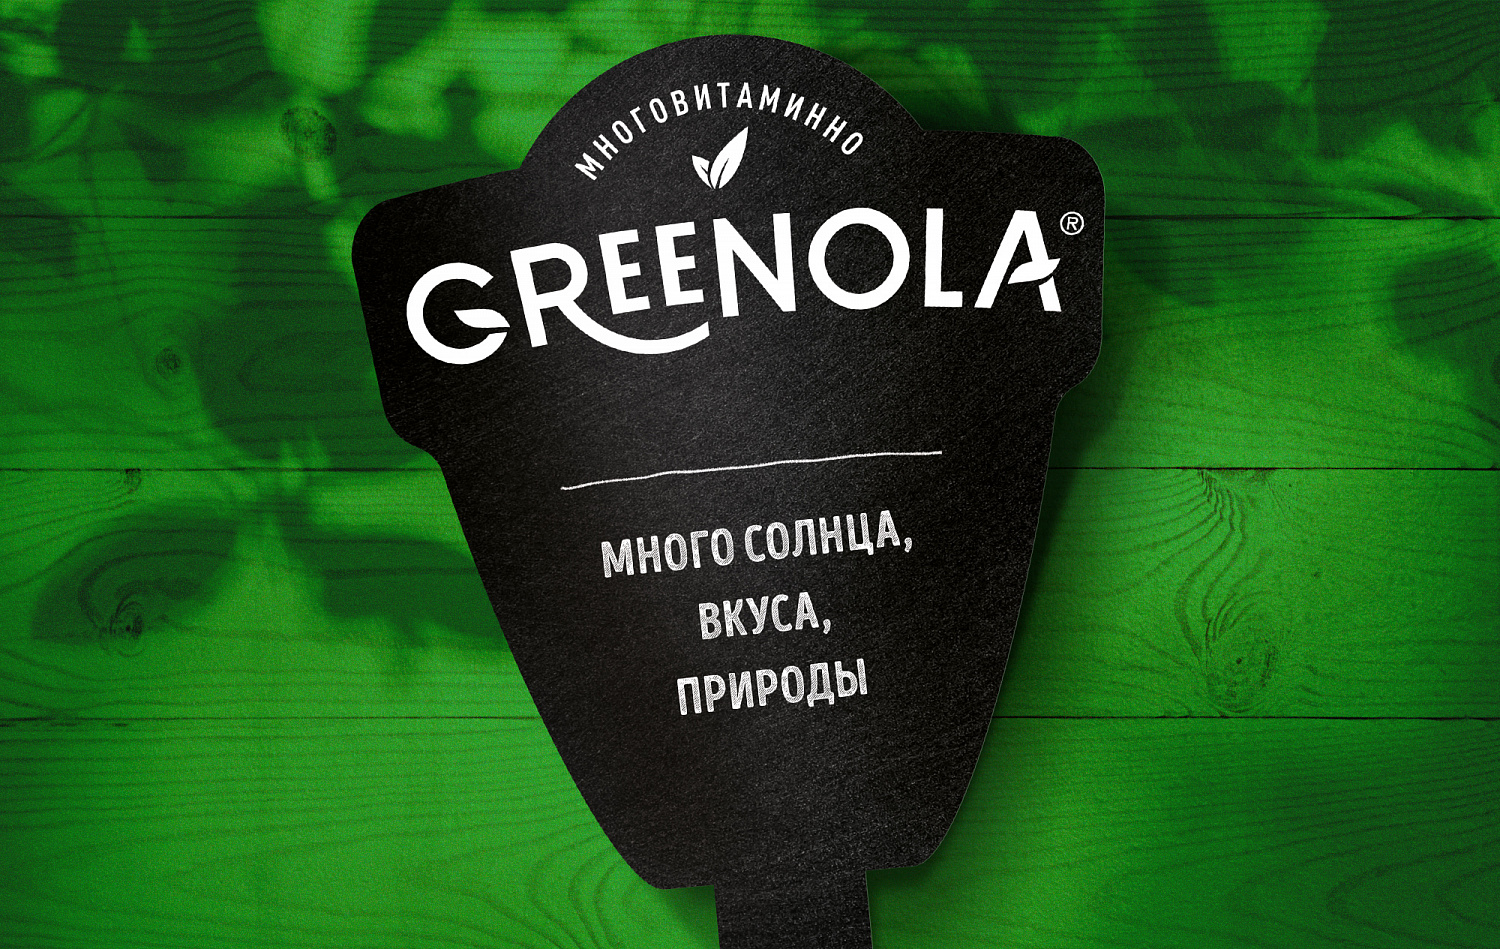 Greenola - Портфолио Depot